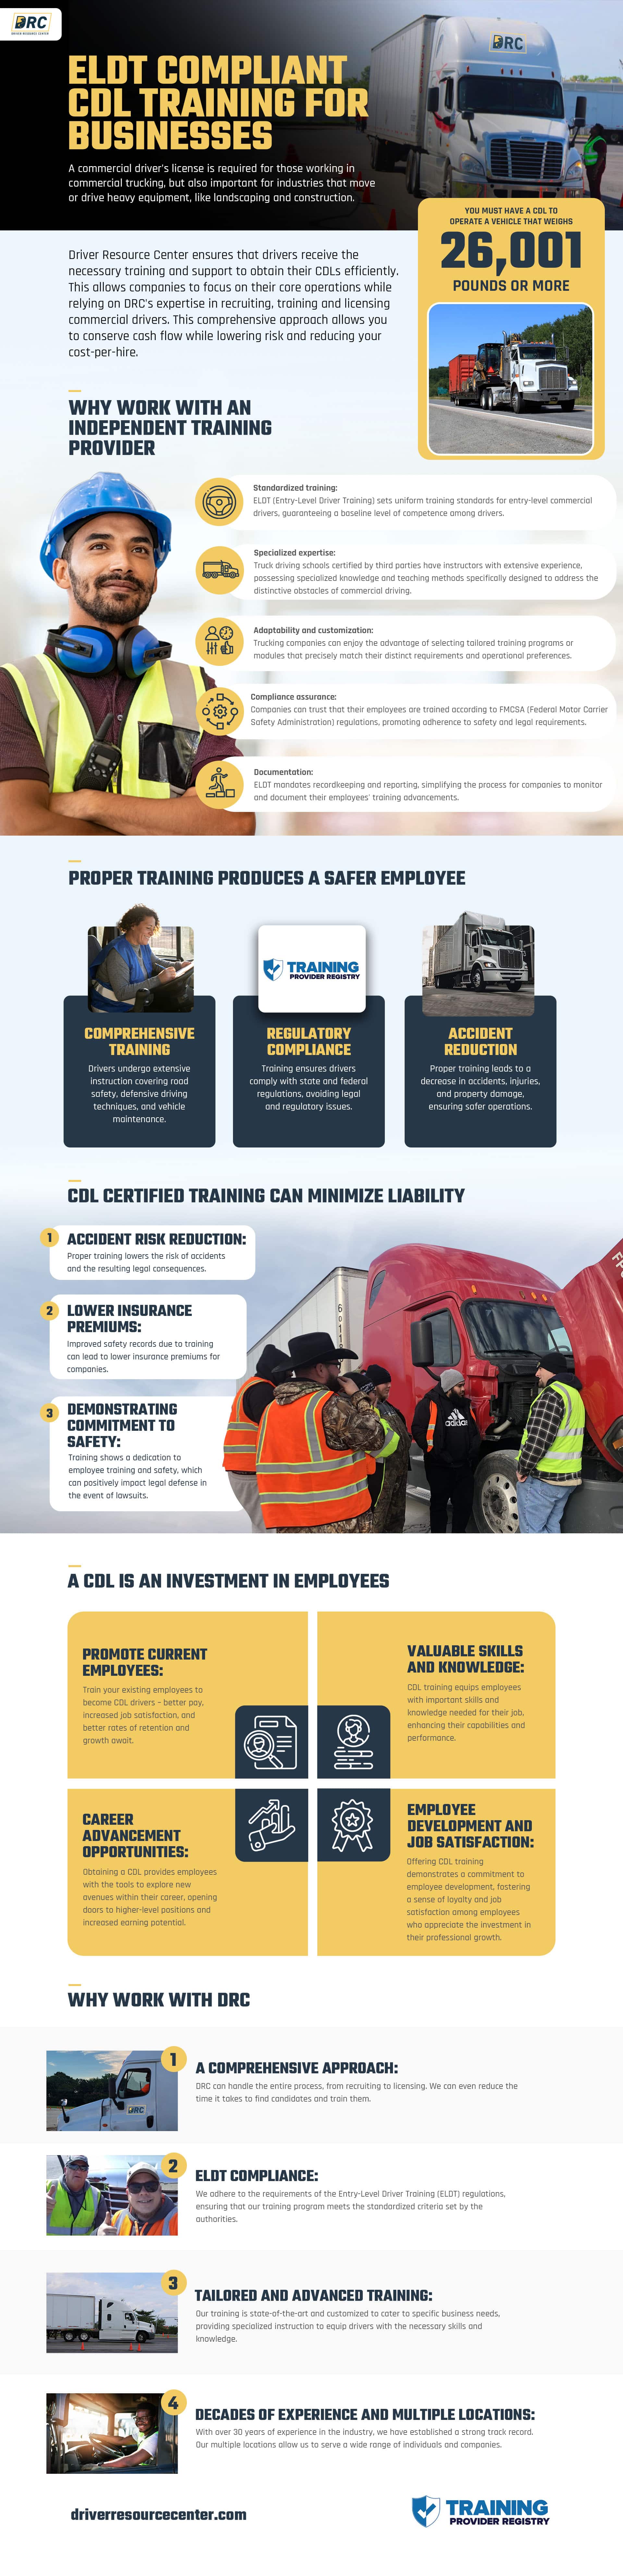 ELDT Compliant CDL Training for Businesses Infographic